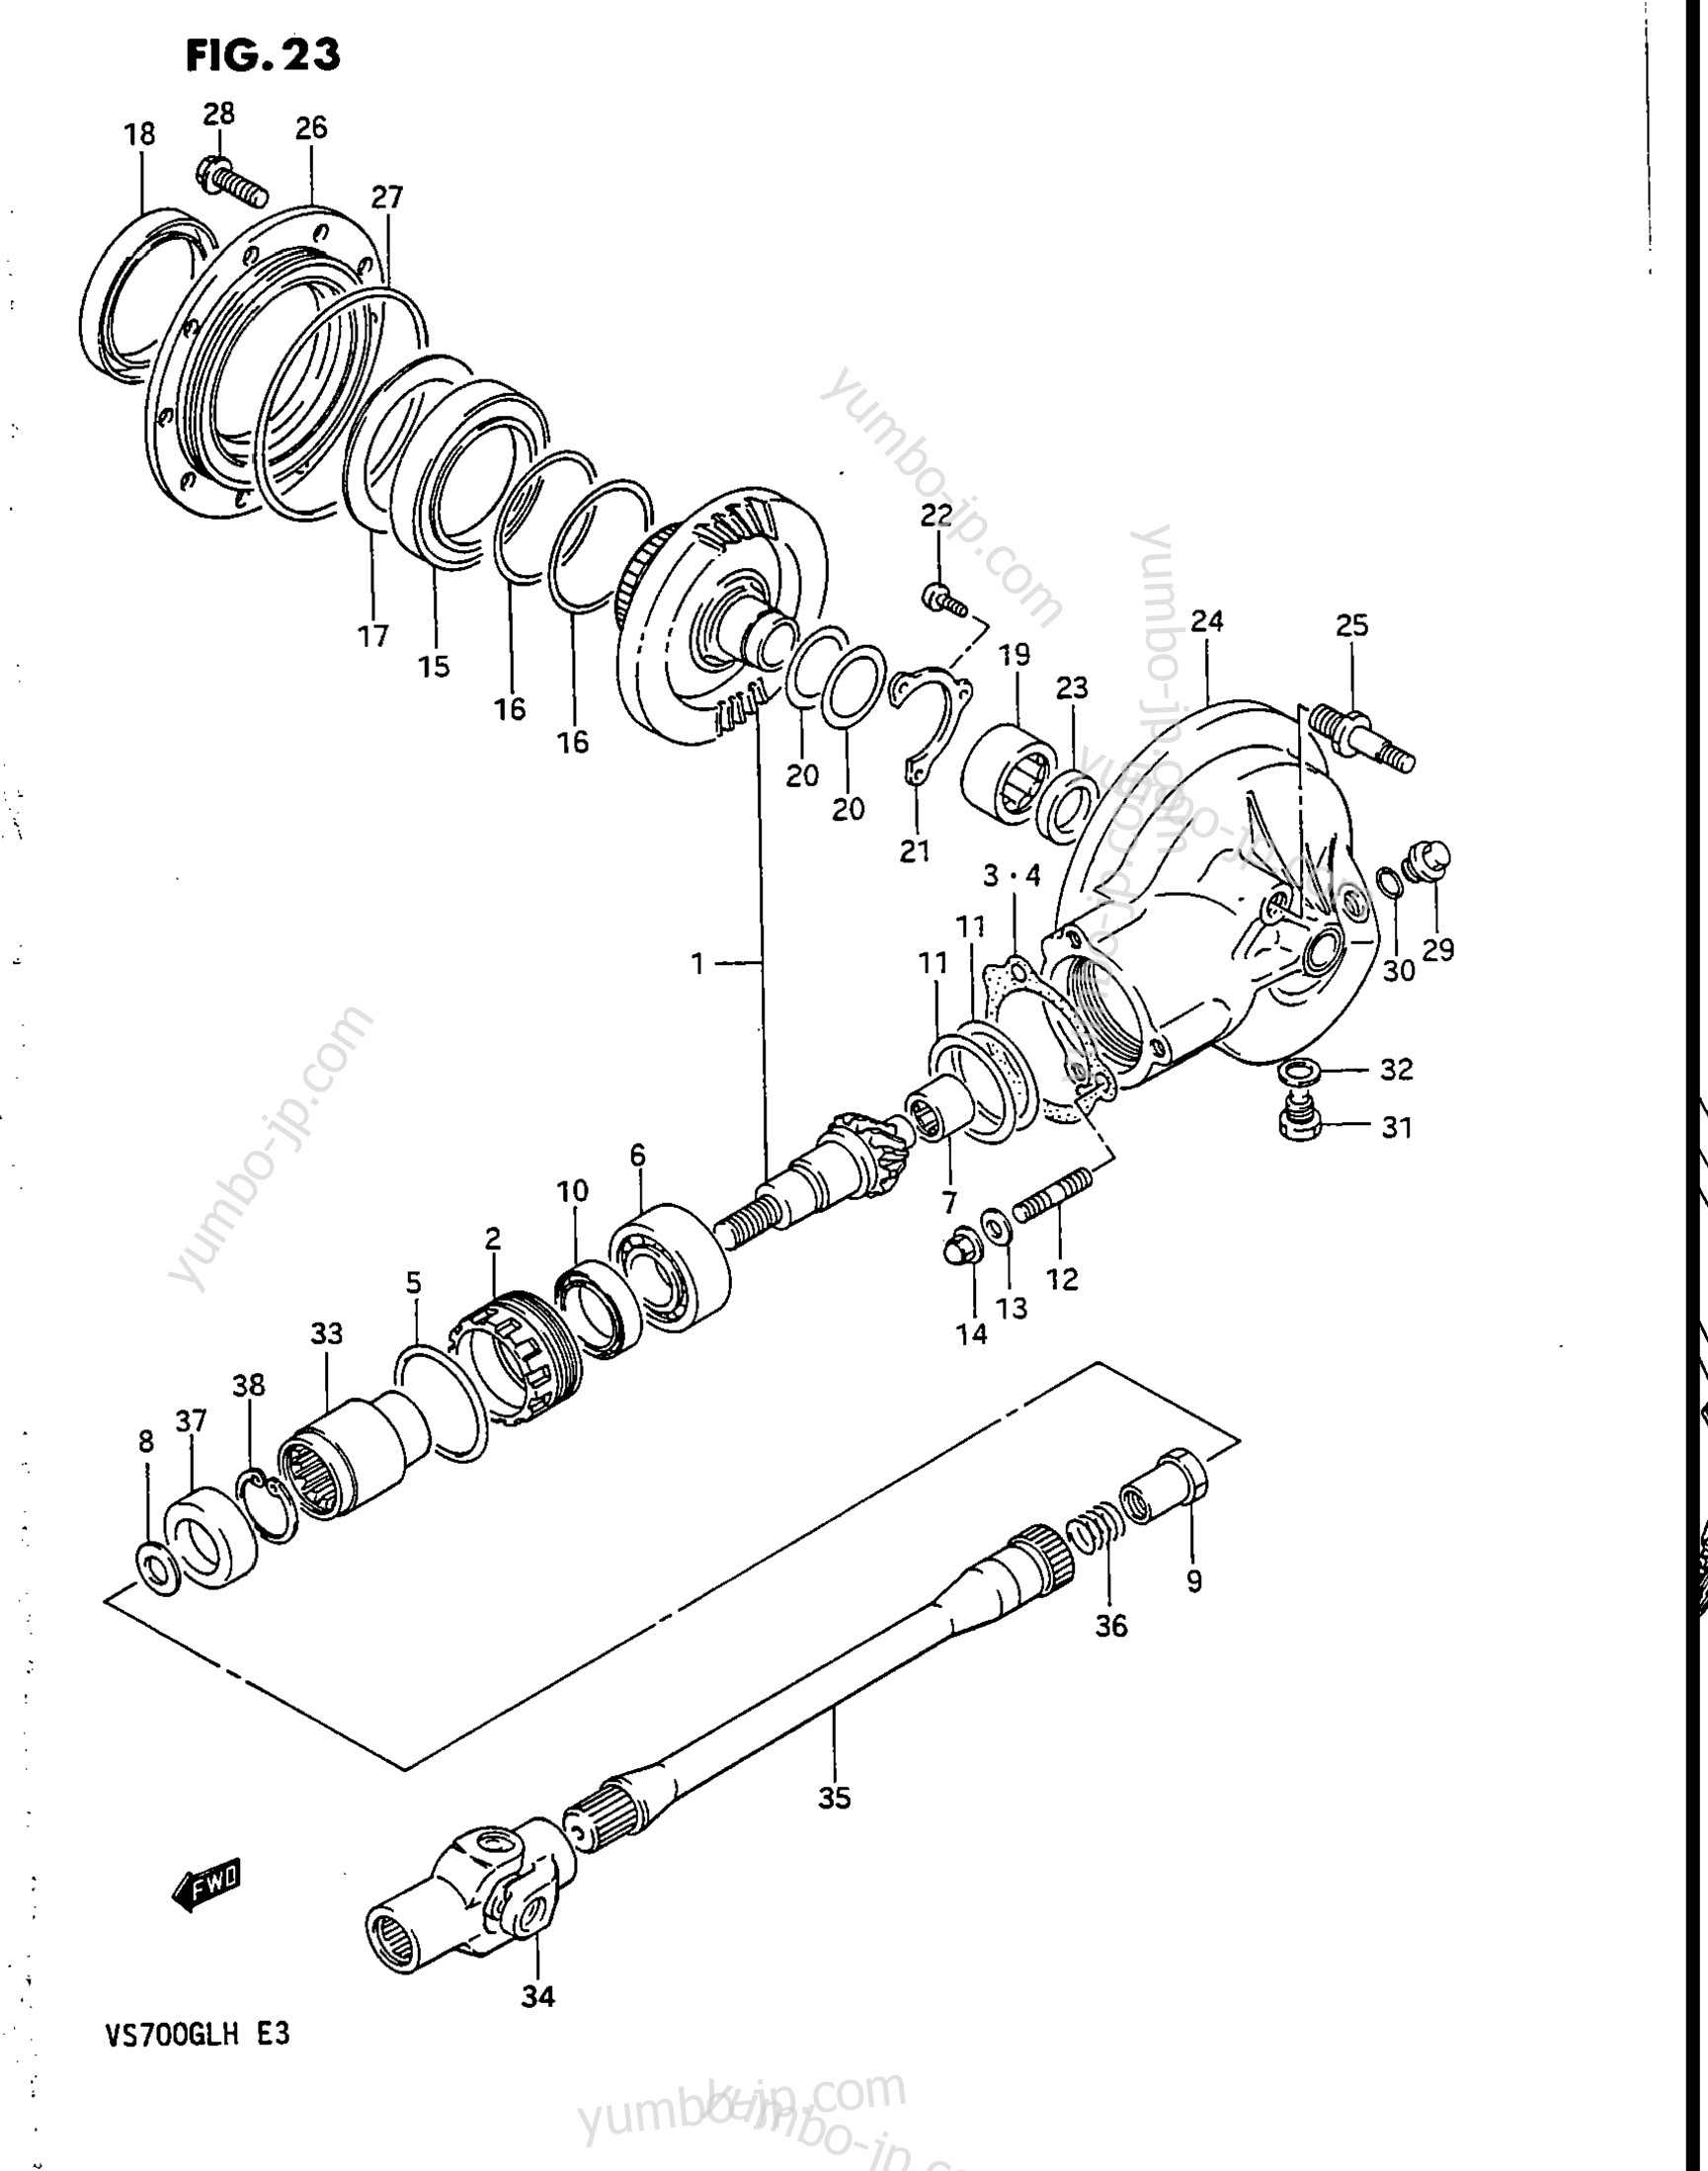 PROPELLER SHAFT - FINAL DRIVE GEAR for motorcycles SUZUKI Intruder (VS700GLP) 1986 year